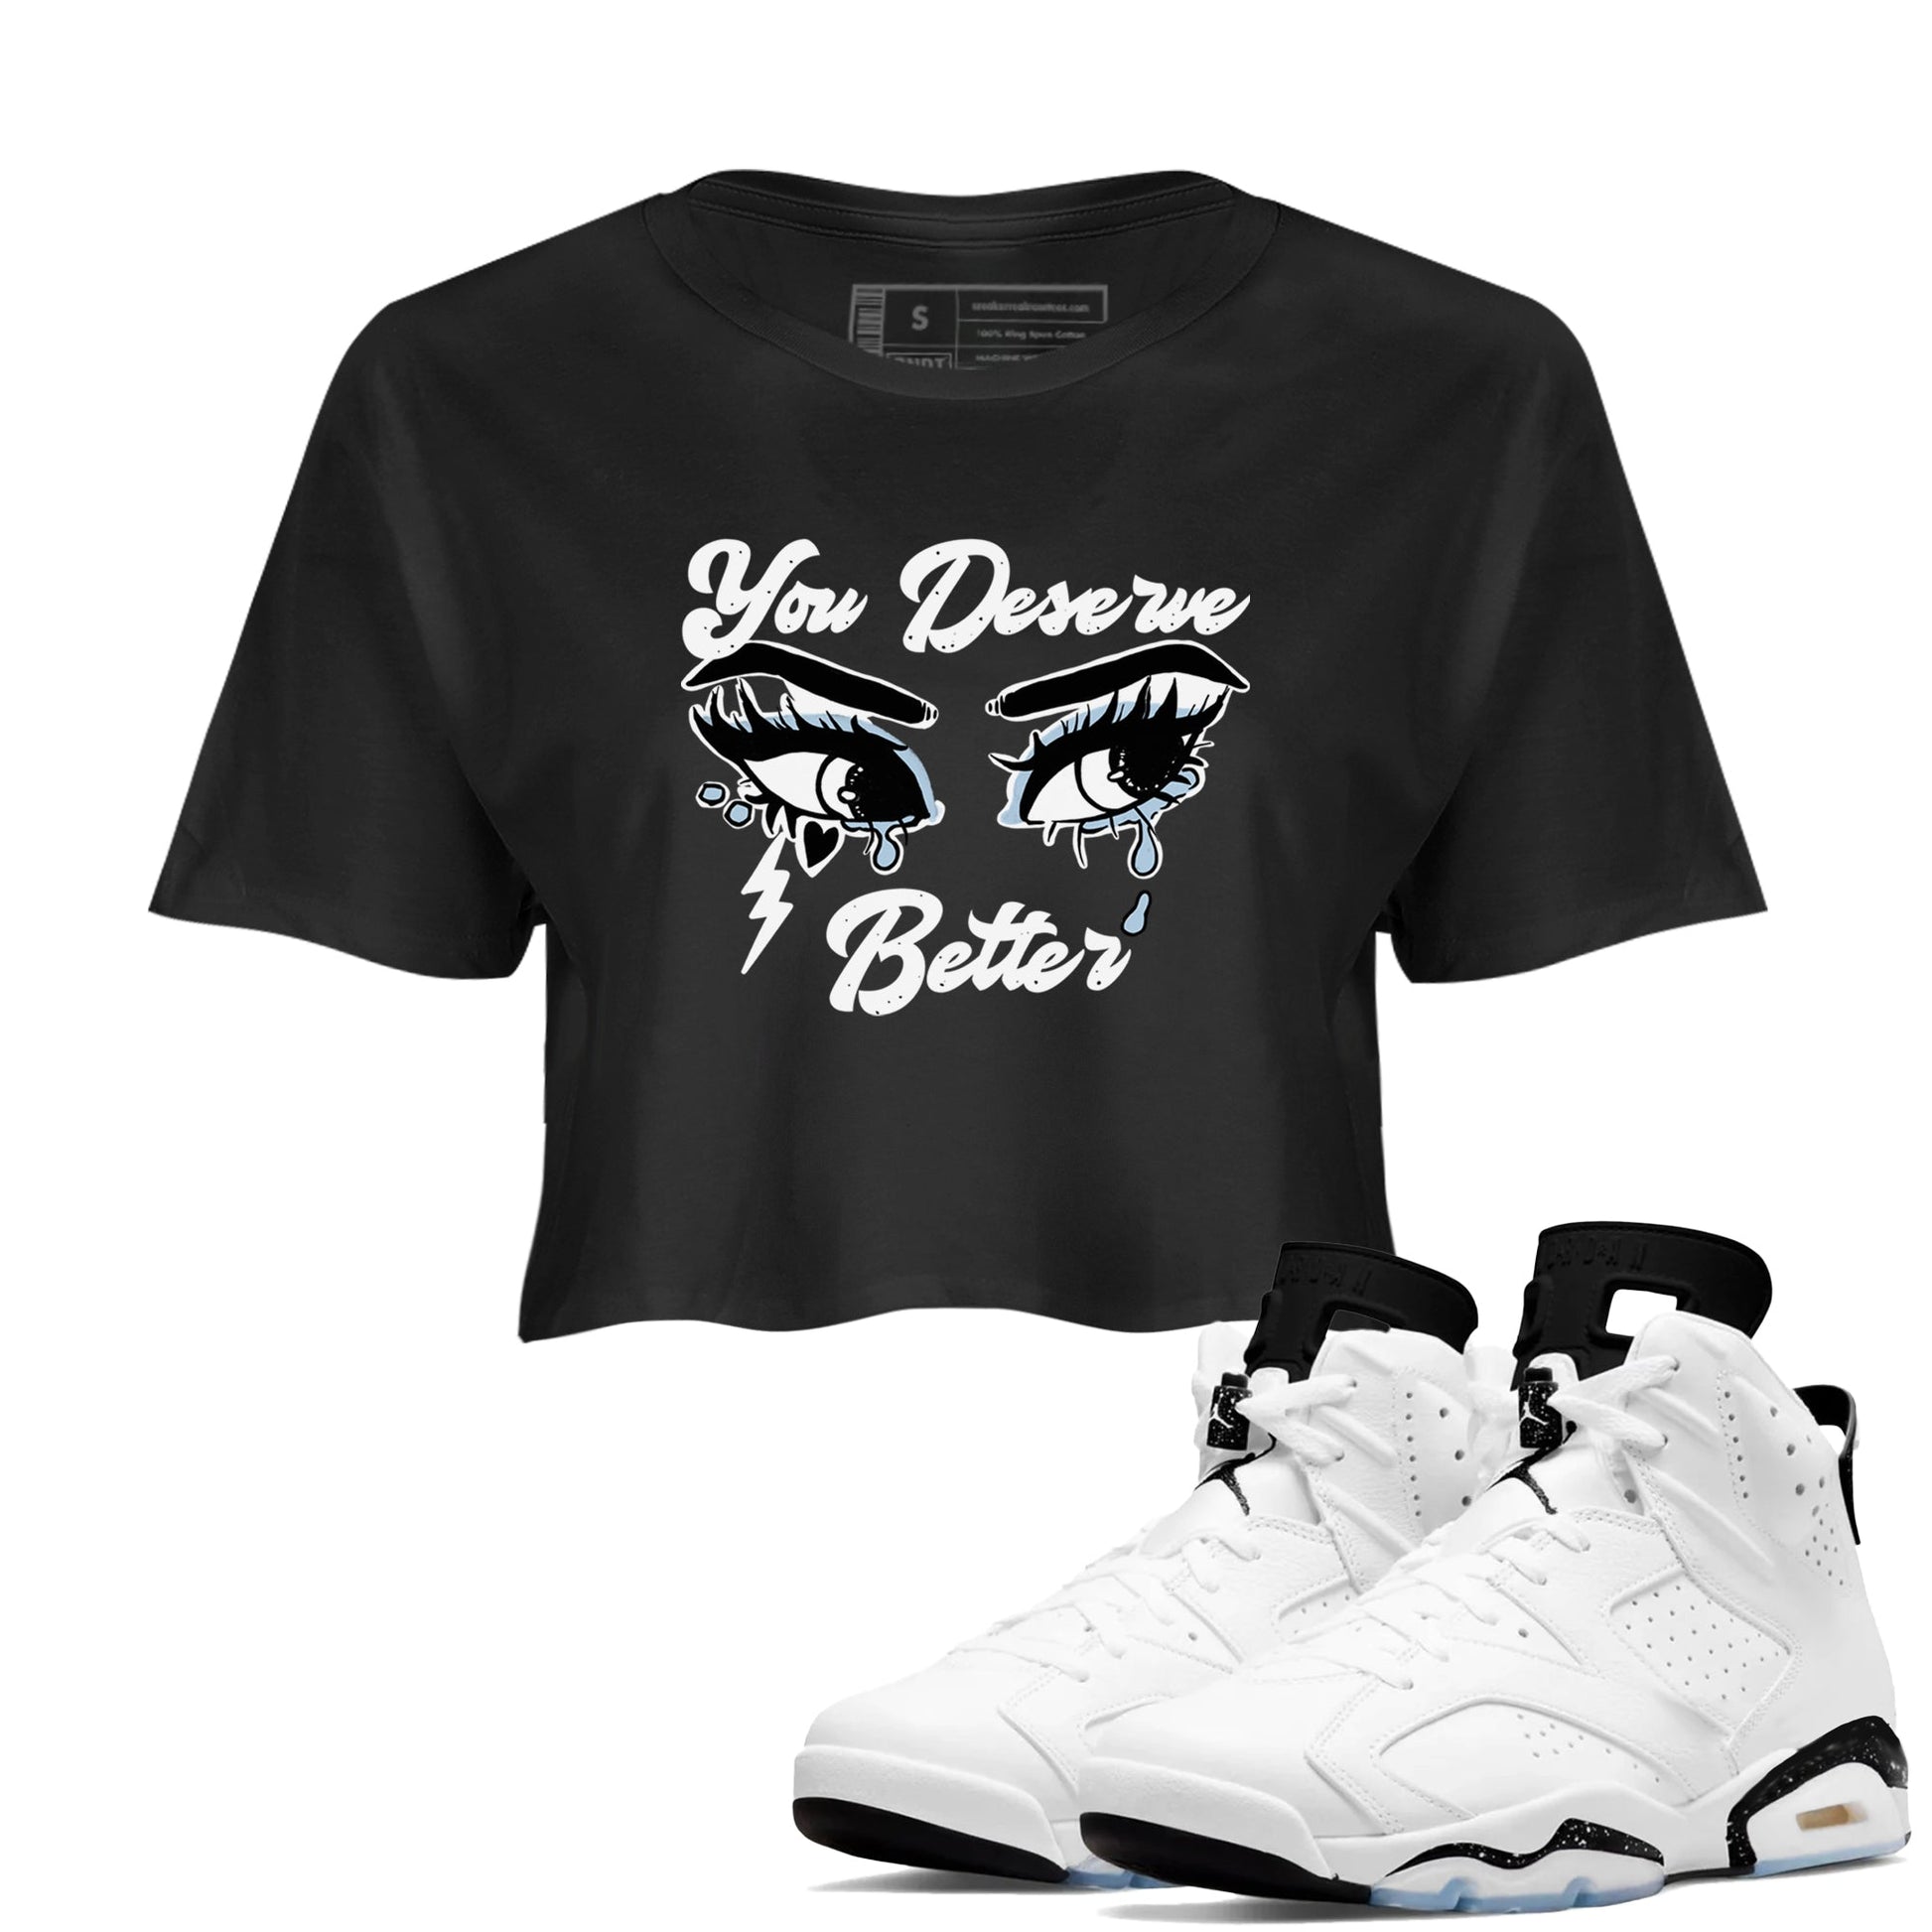 6s White Black shirt to match jordans You Deserve Better sneaker tees Air Jordan 6 White Black SNRT Sneaker Release Tees Black 1 crop length shirt